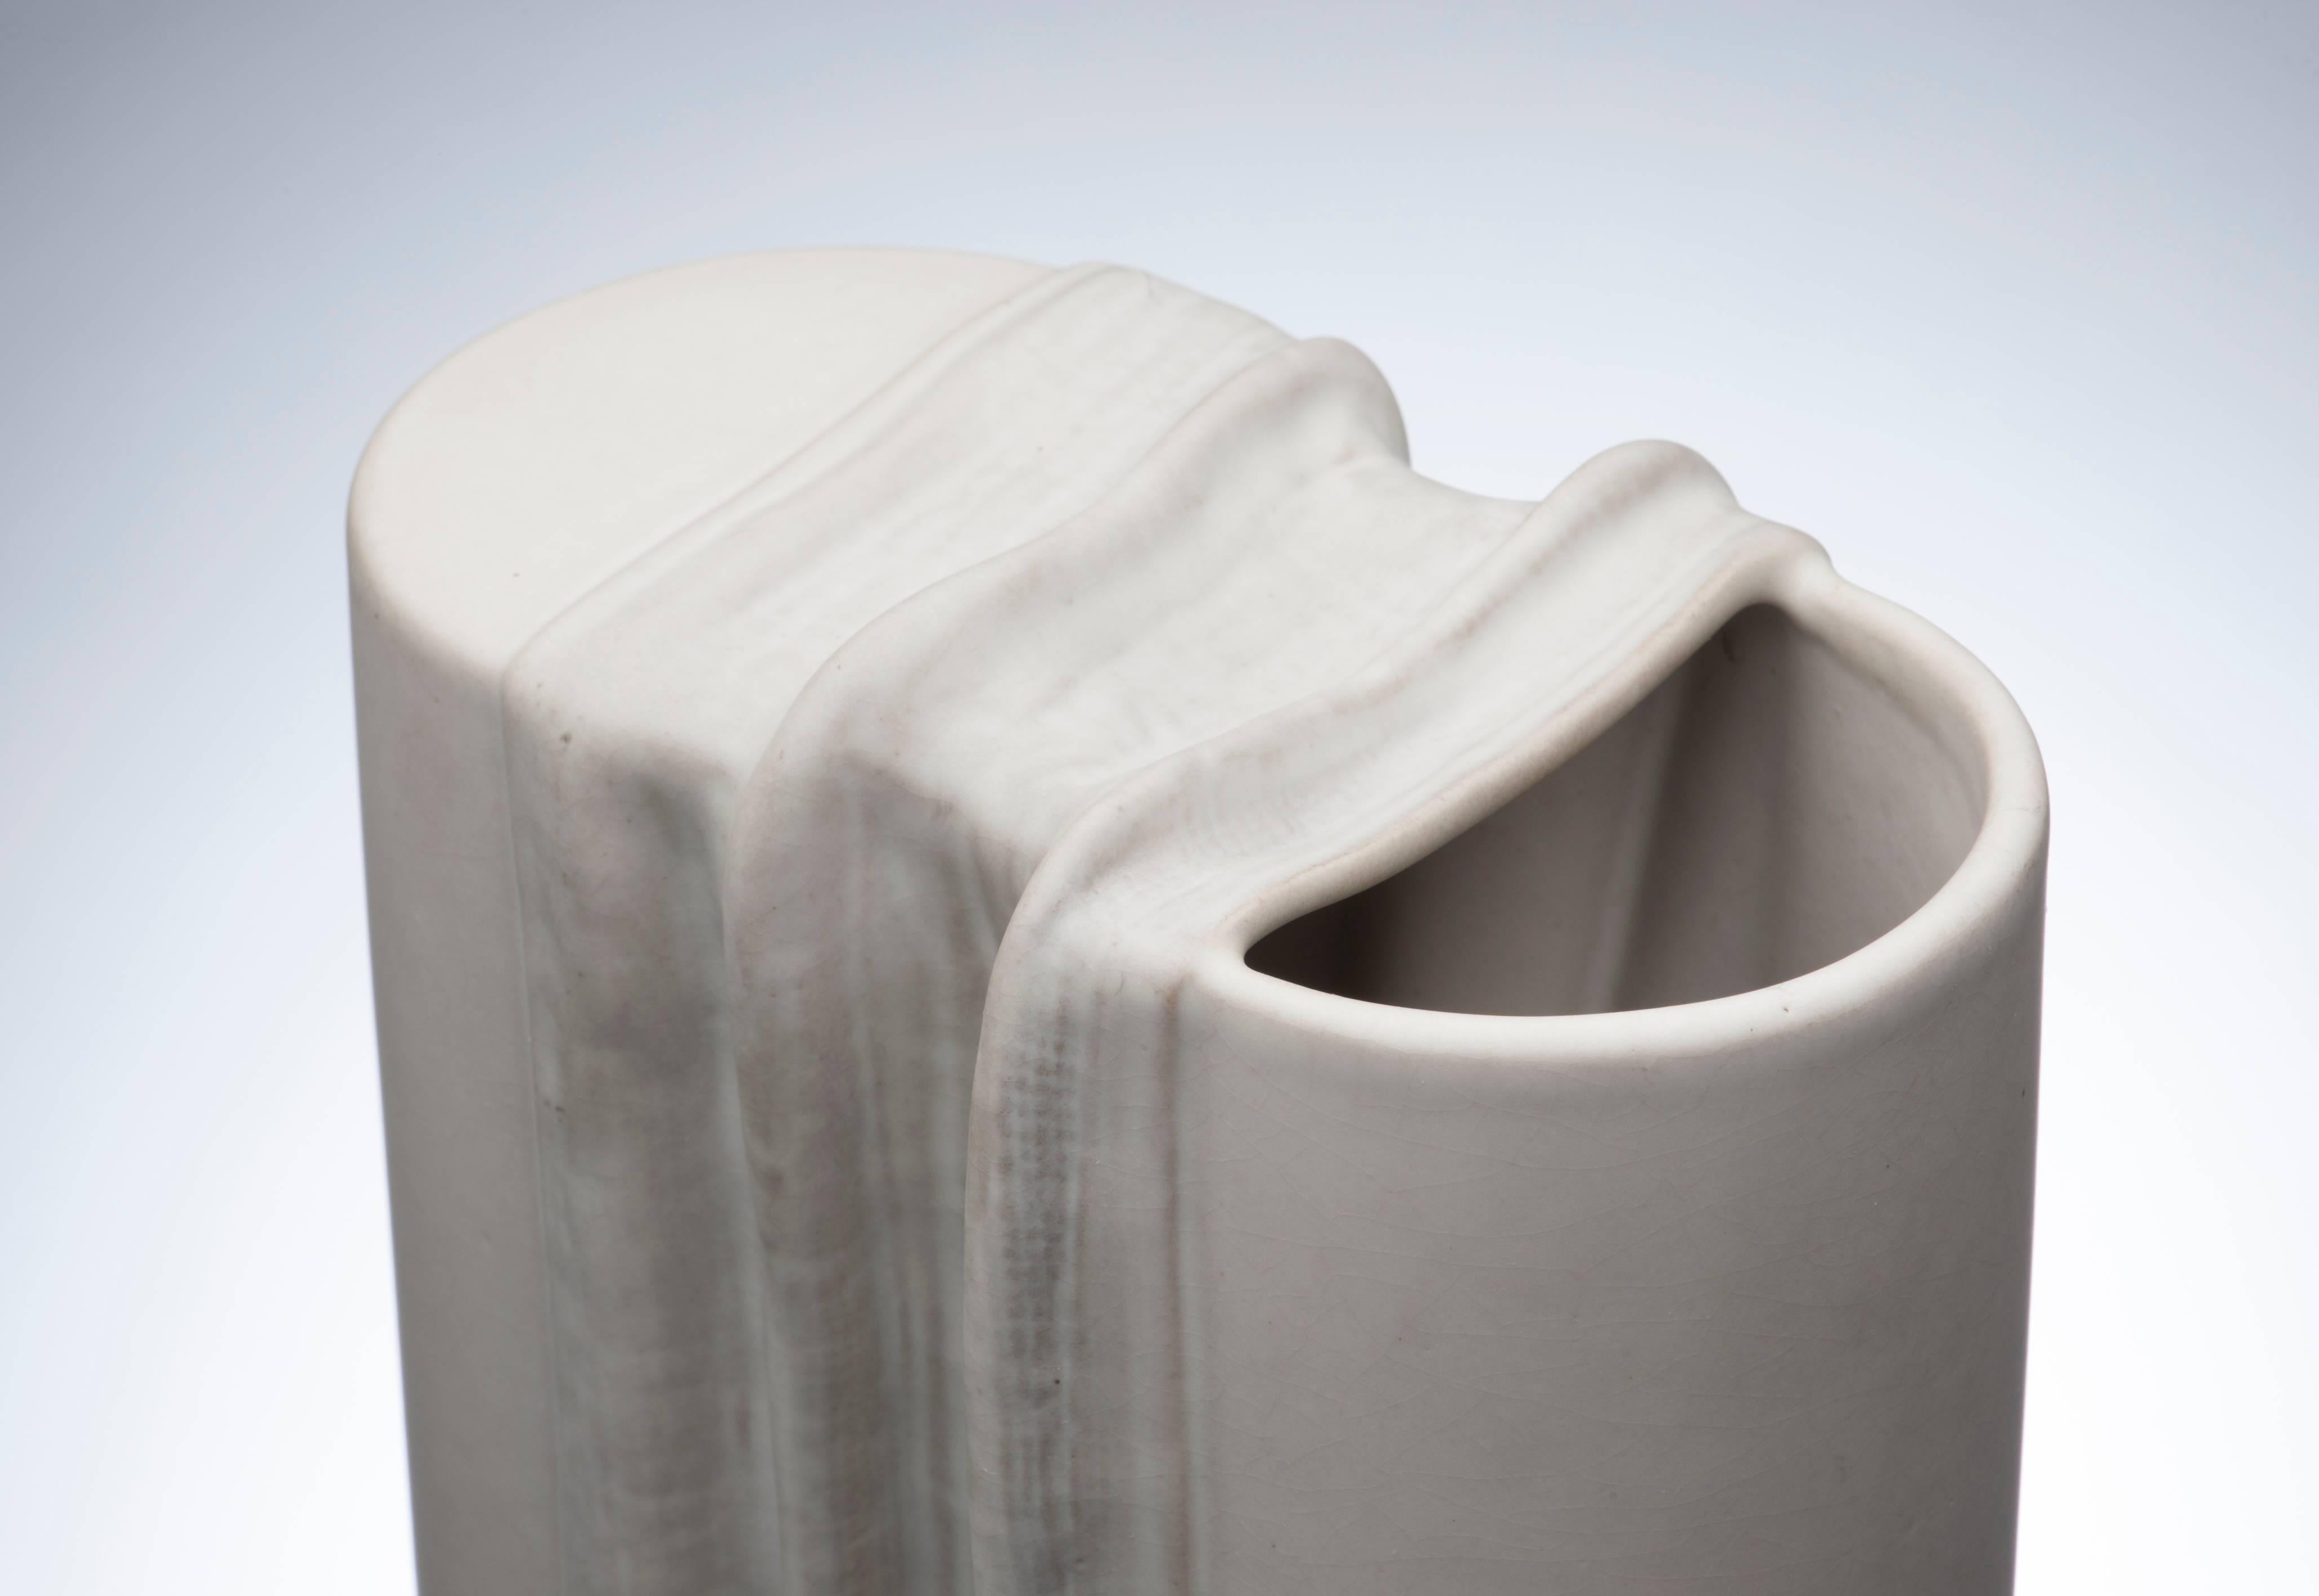 Appealing Rosenthal studio-line ceramic vase with matte gray glaze.